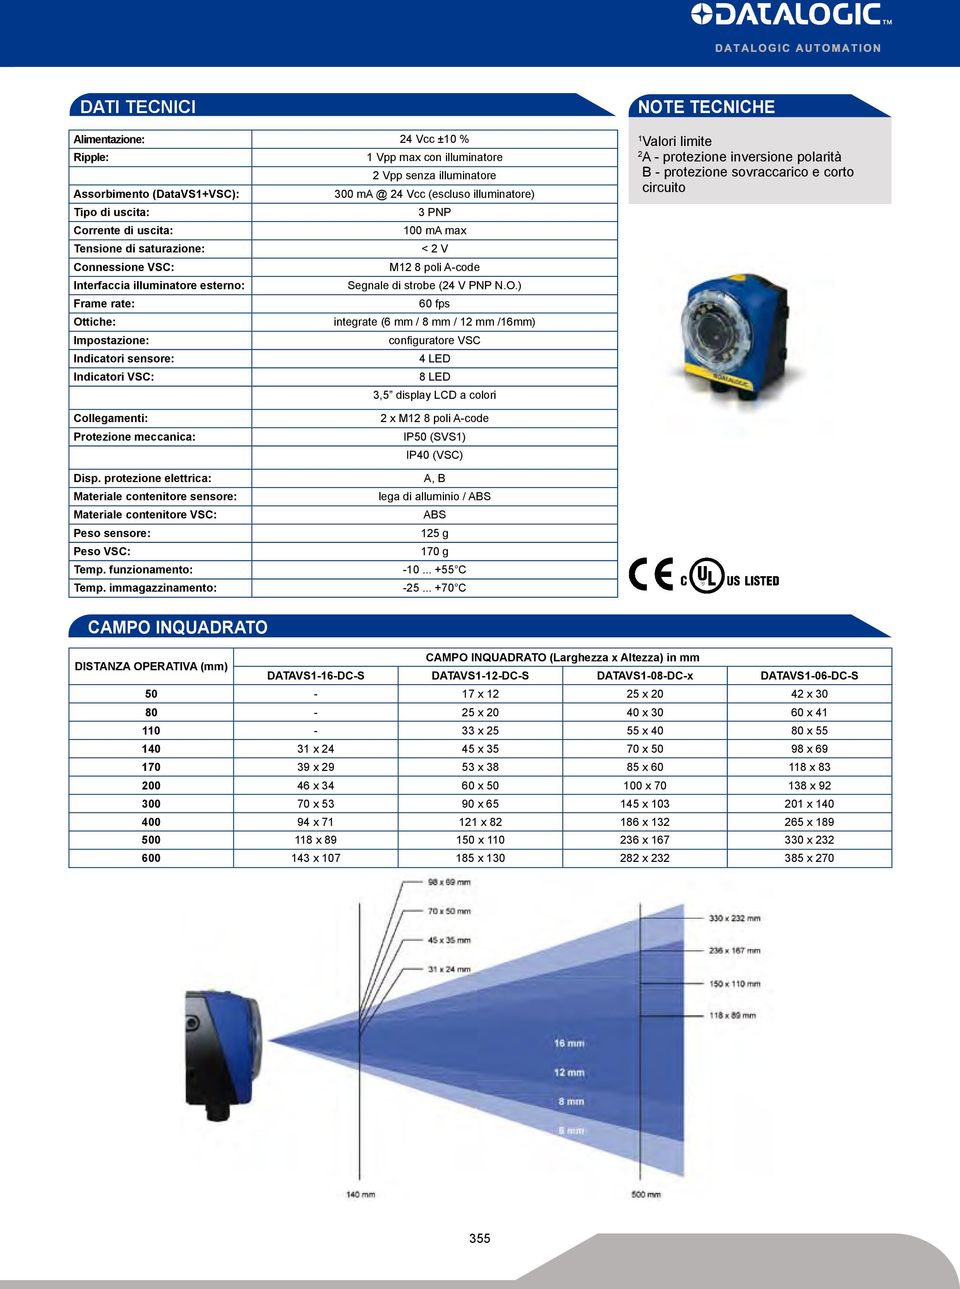 ) Frame rate: 60 fps Ottiche: integrate (6 mm / 8 mm / 12 mm /16mm) Impostazione: configuratore VSC Indicatori sensore: 4 LED Indicatori VSC: 8 LED 3,5 display LCD a colori NOTE TECNICHE 1 Valori